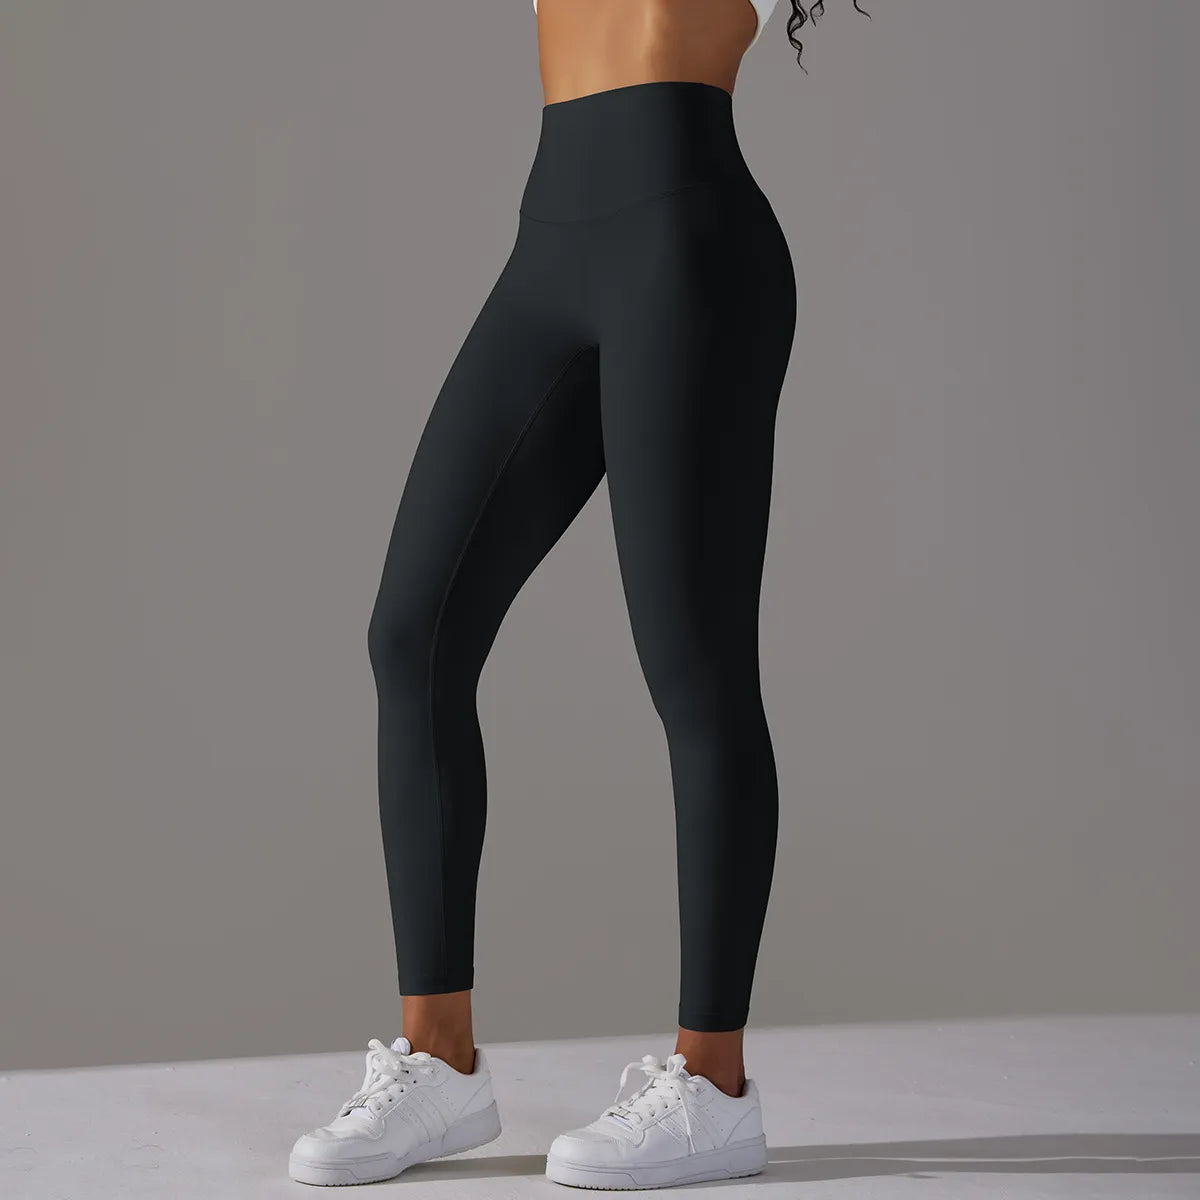 ACTINPUT Black Leggings for Women Soft High Waisted Tummy Control Leggings  Sports Workout Gym Running Yoga Pants